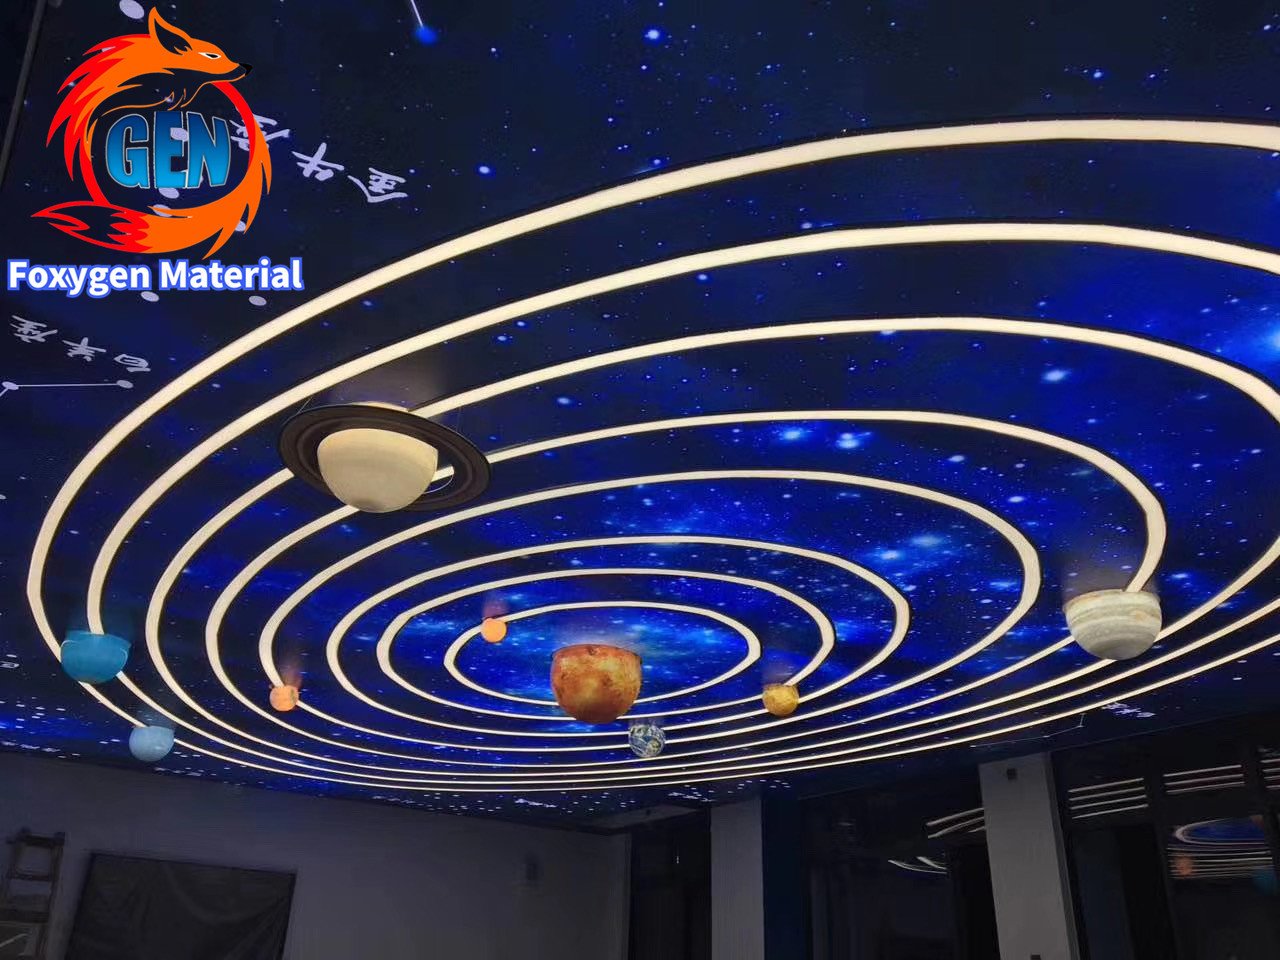 Foxygen customized print uv Stretch ceiling film the solar system .